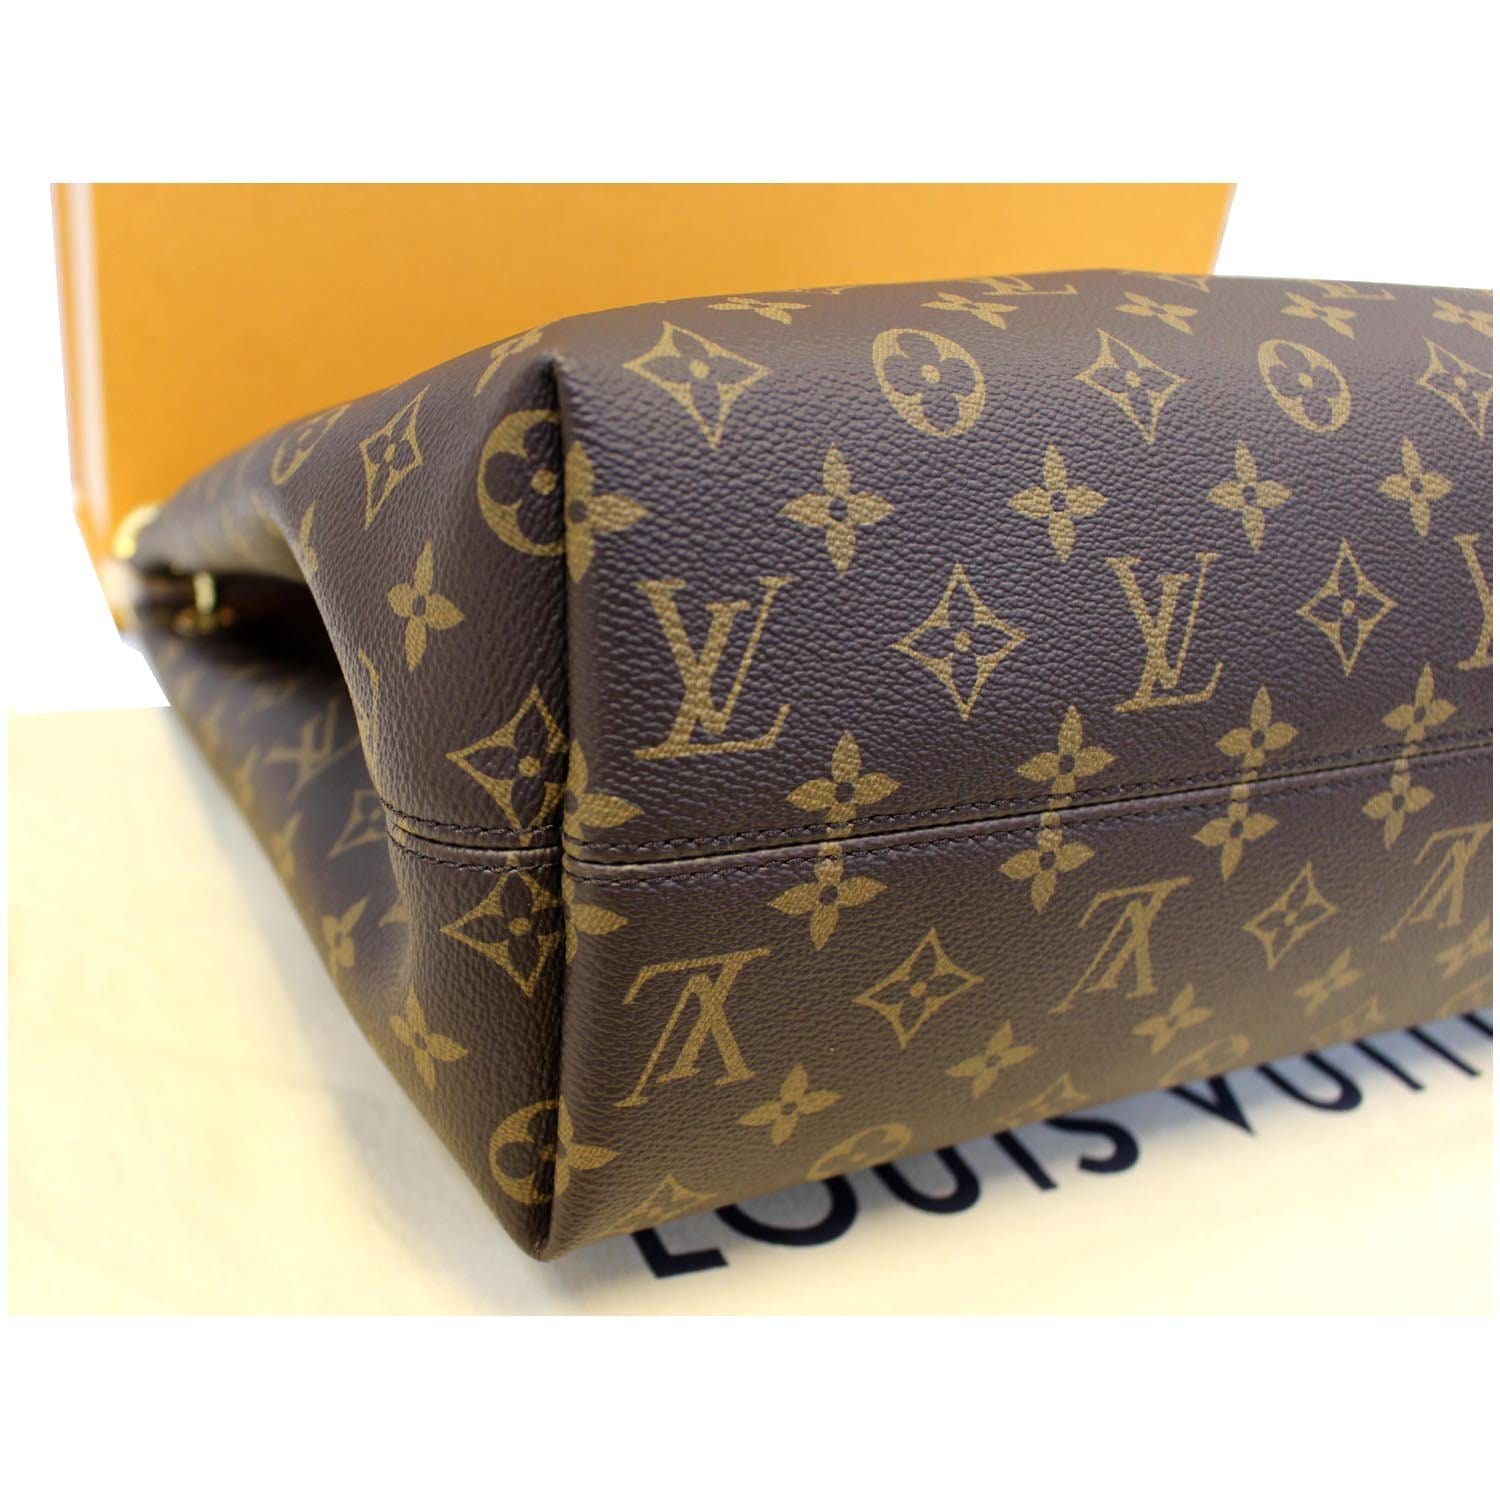 Graceful cloth handbag Louis Vuitton Beige in Cloth - 35961773